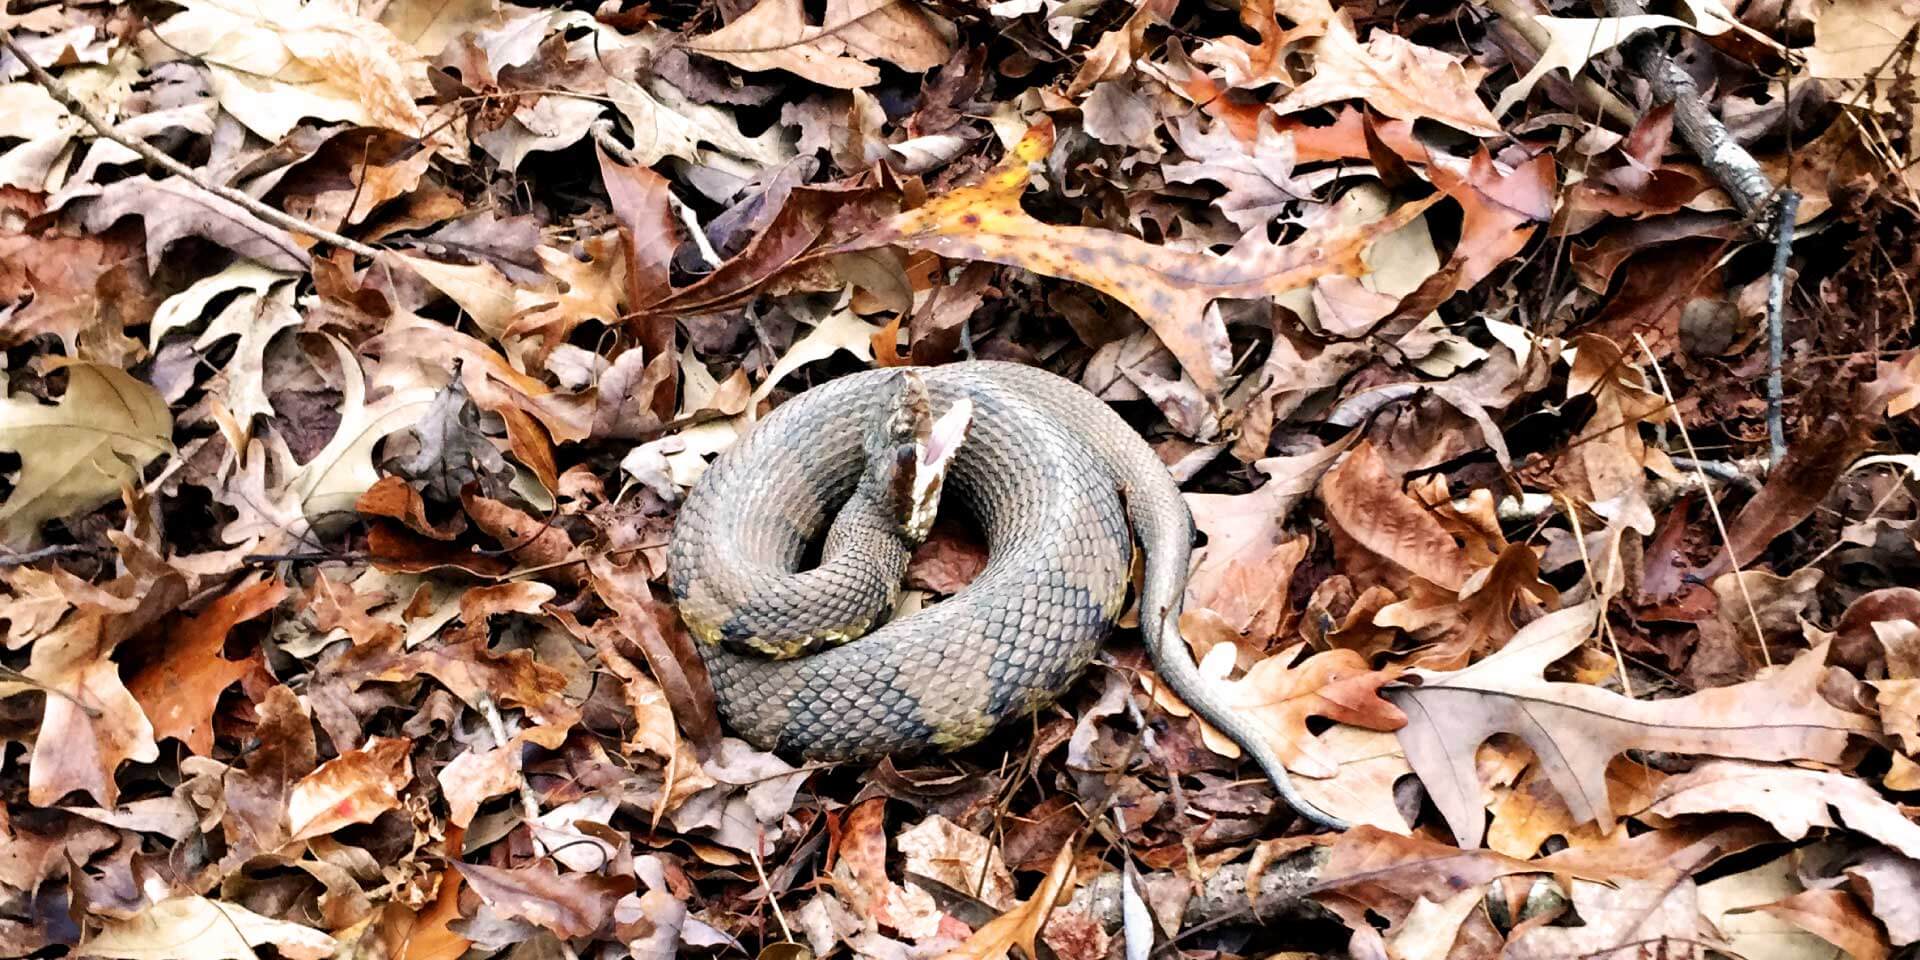 viper near arlington virginia